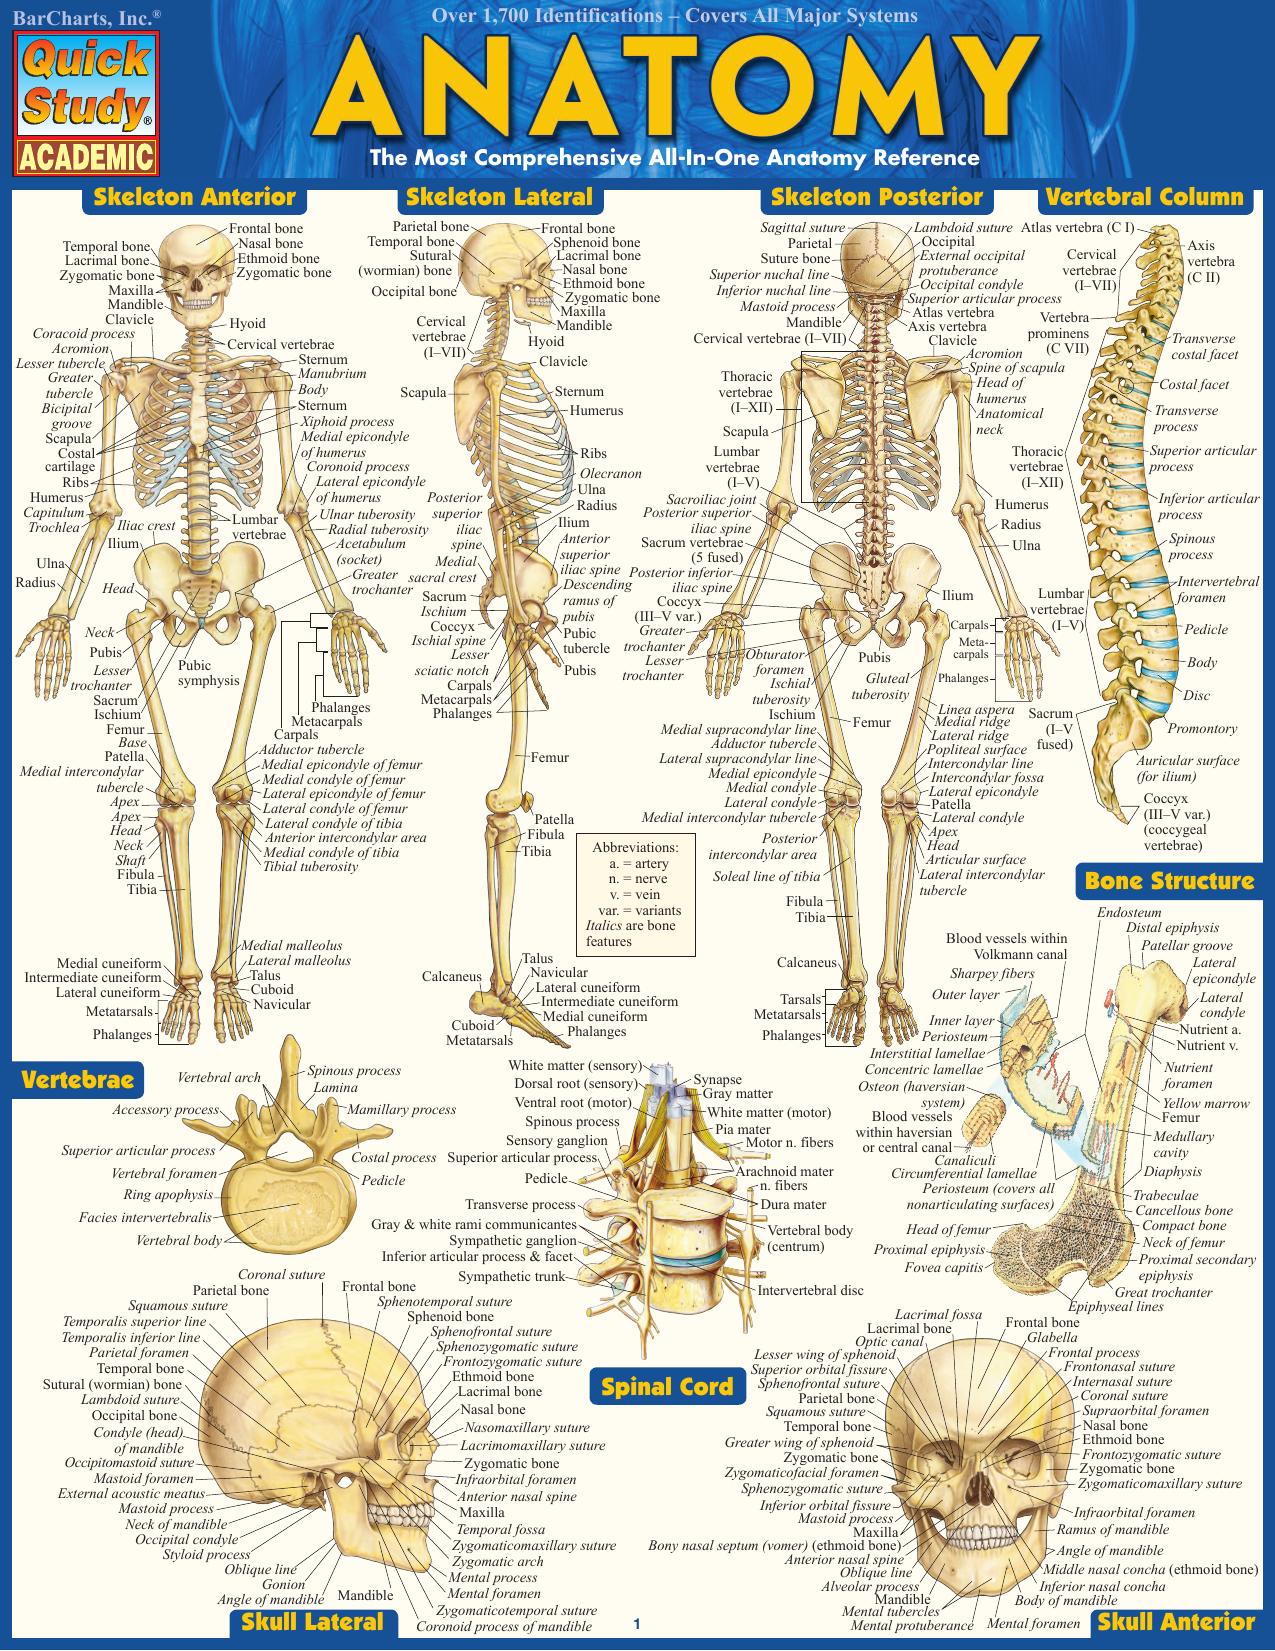 Anatomy (Quick Study Academic), 2003 Edition - SoftArchive